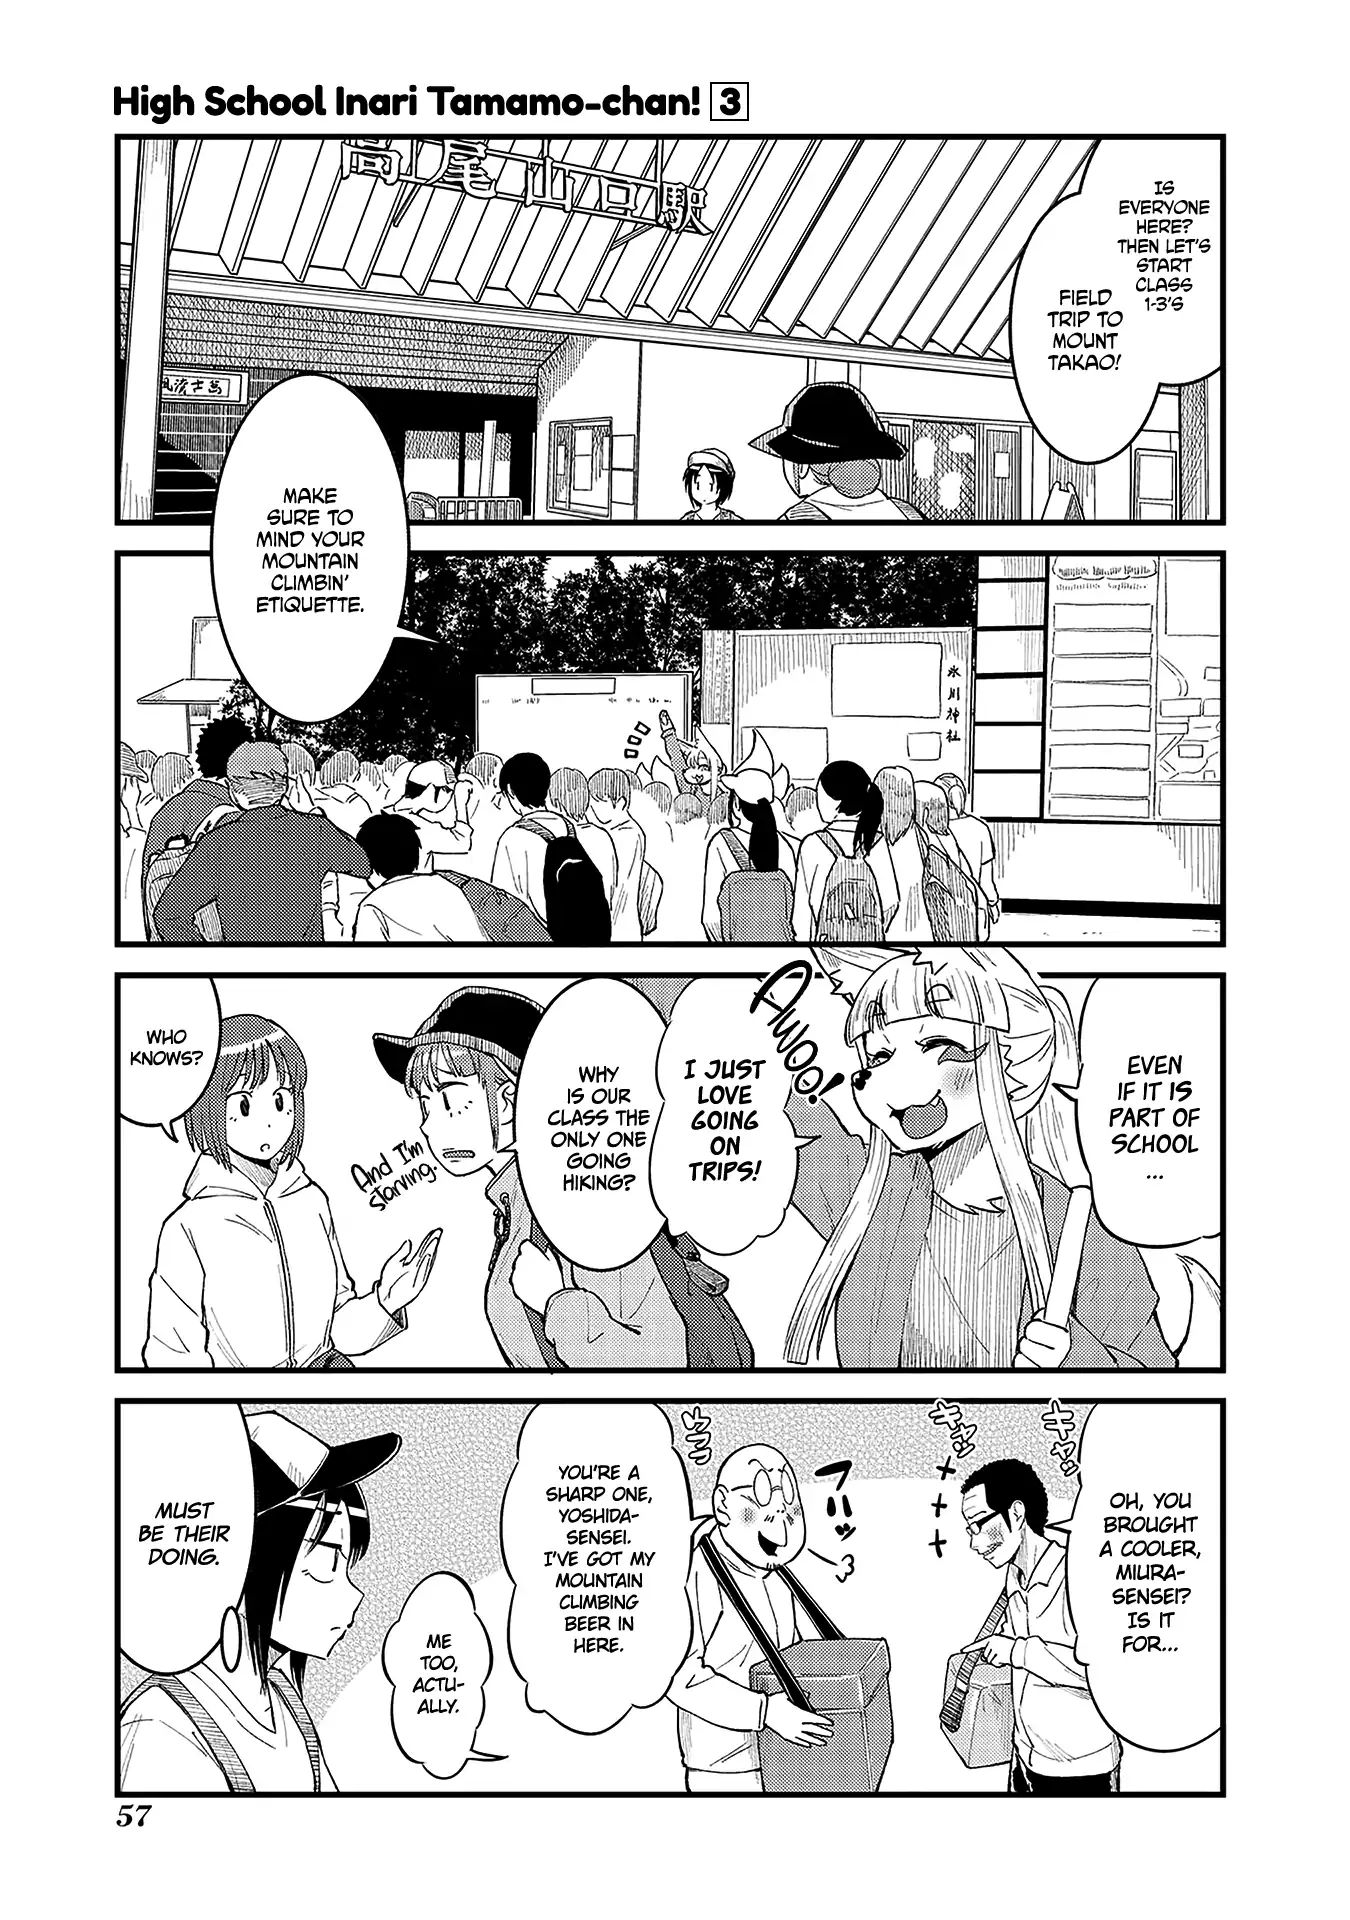 High School Inari Tamamo-chan! Vol.3 Chapter 38